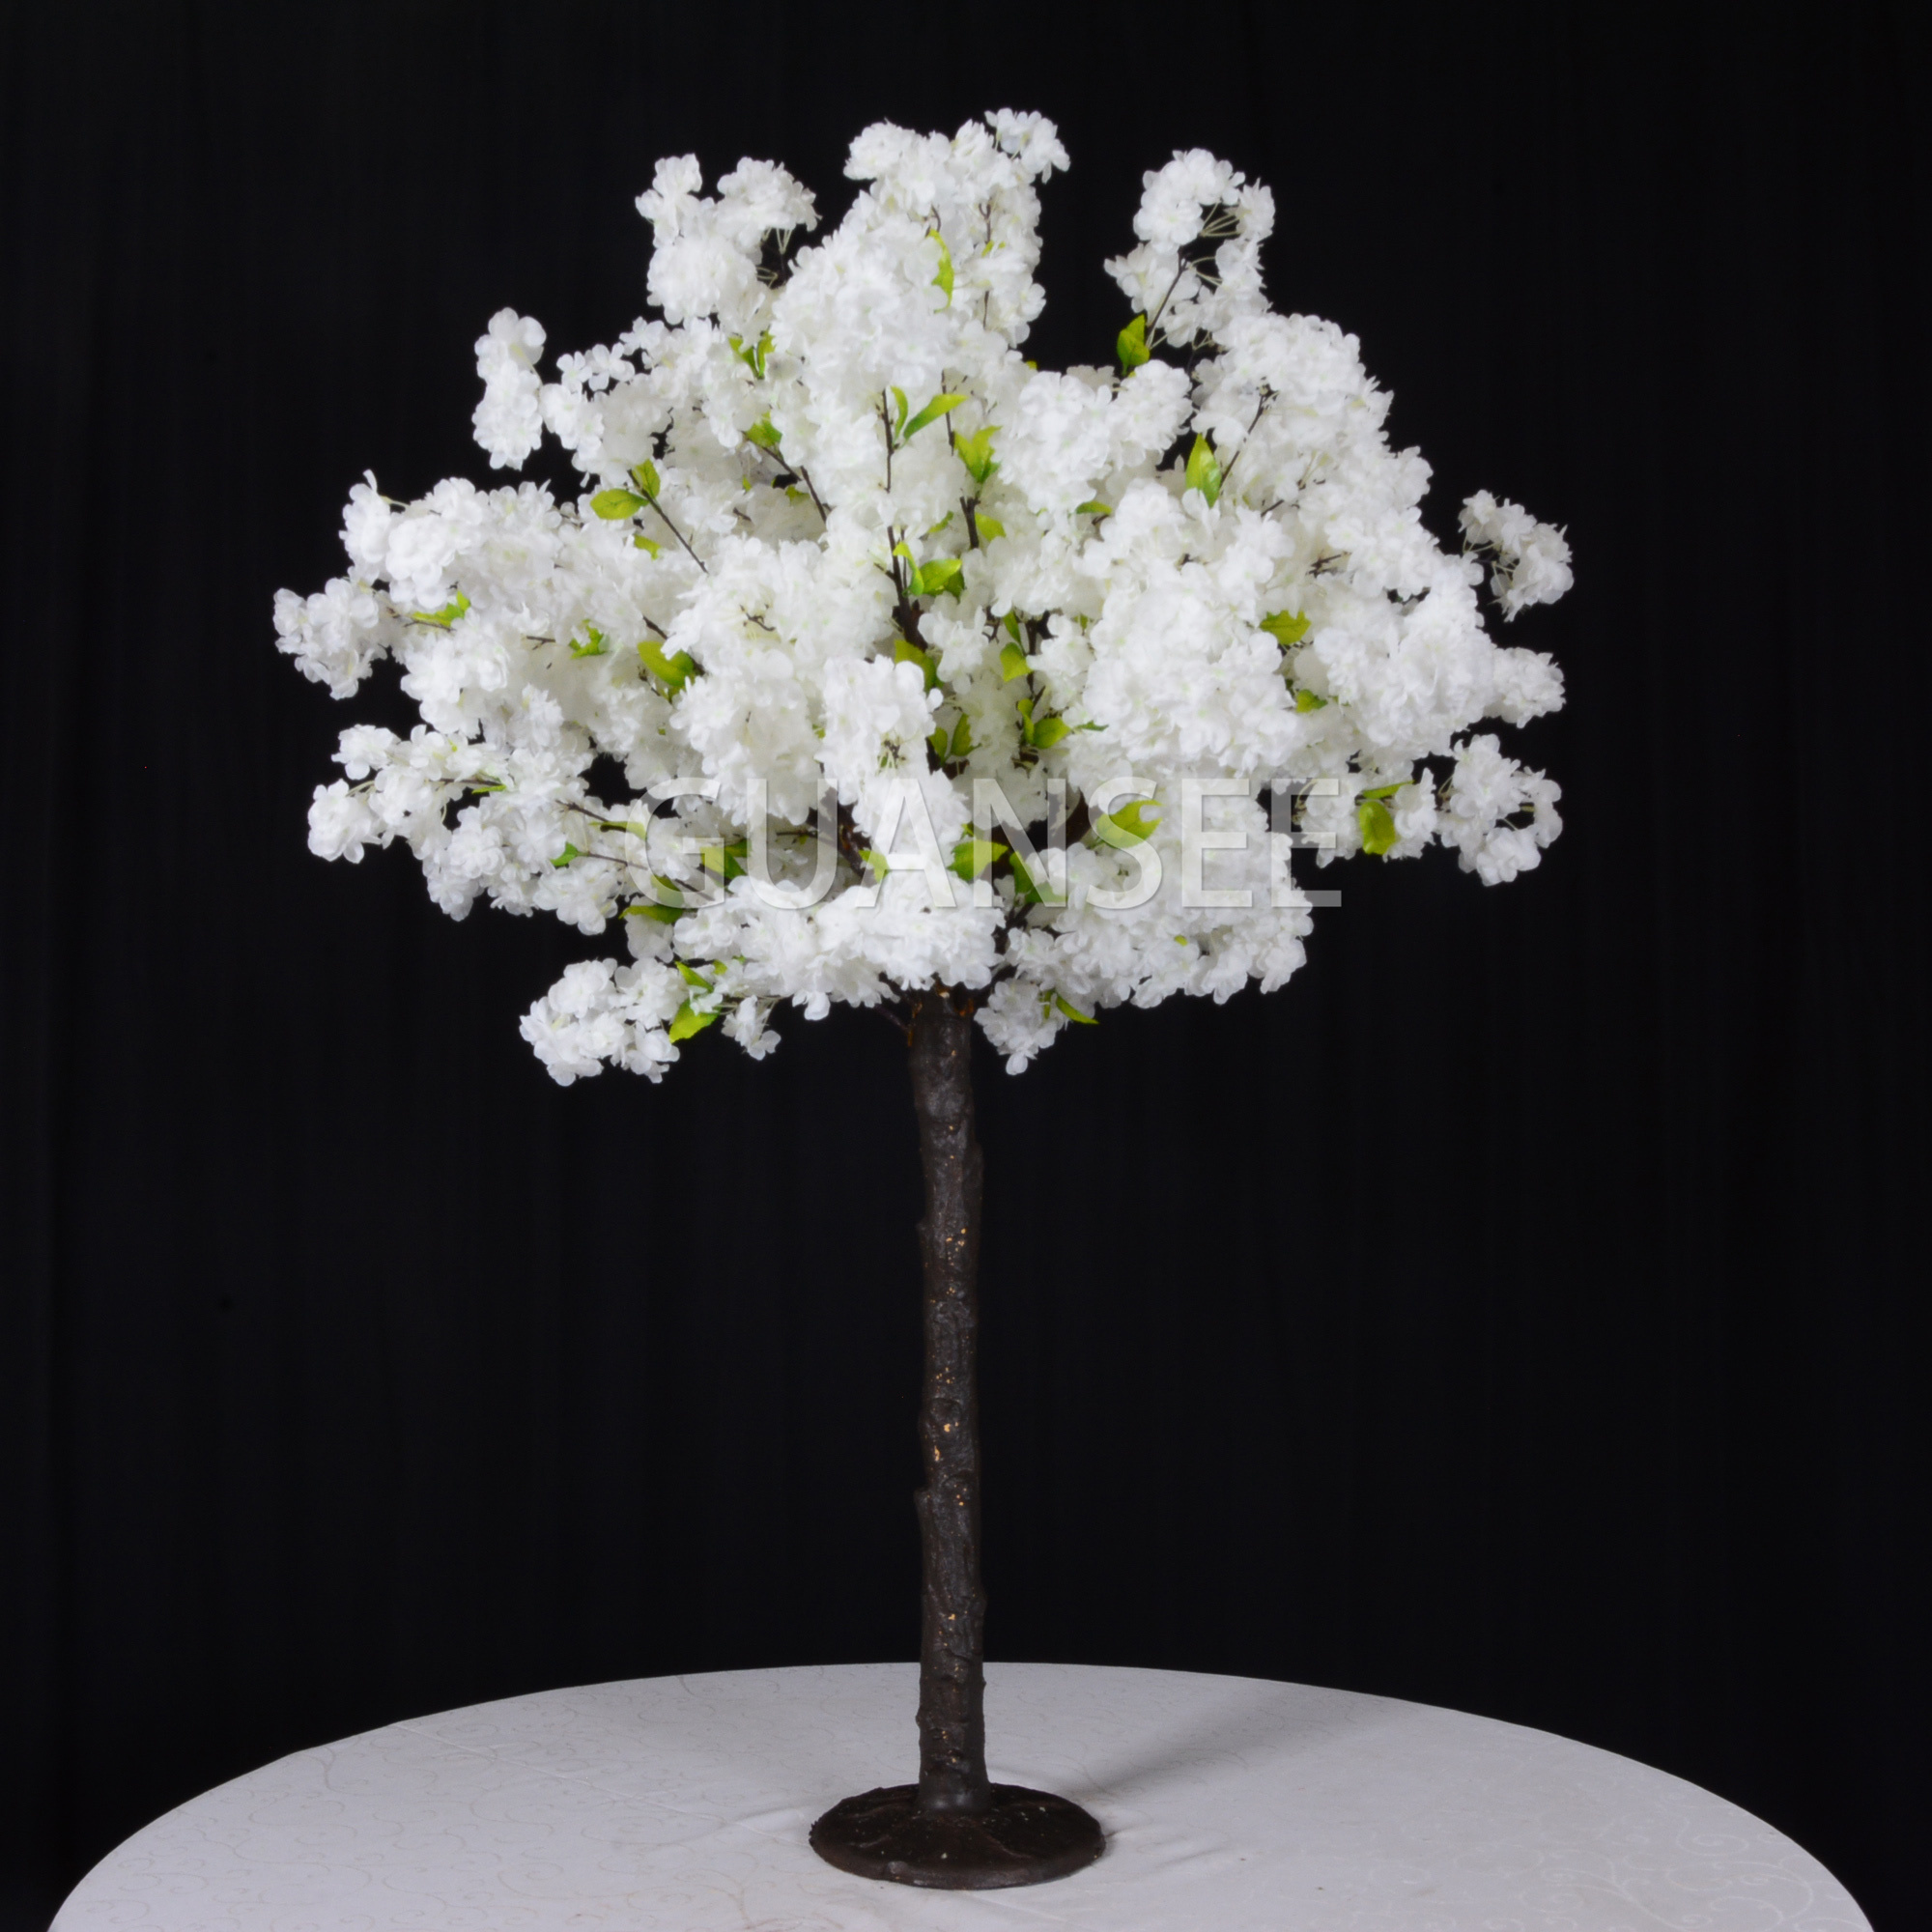 4ft artificial White flowers cherry blossom tree decoration wedding centerpiece